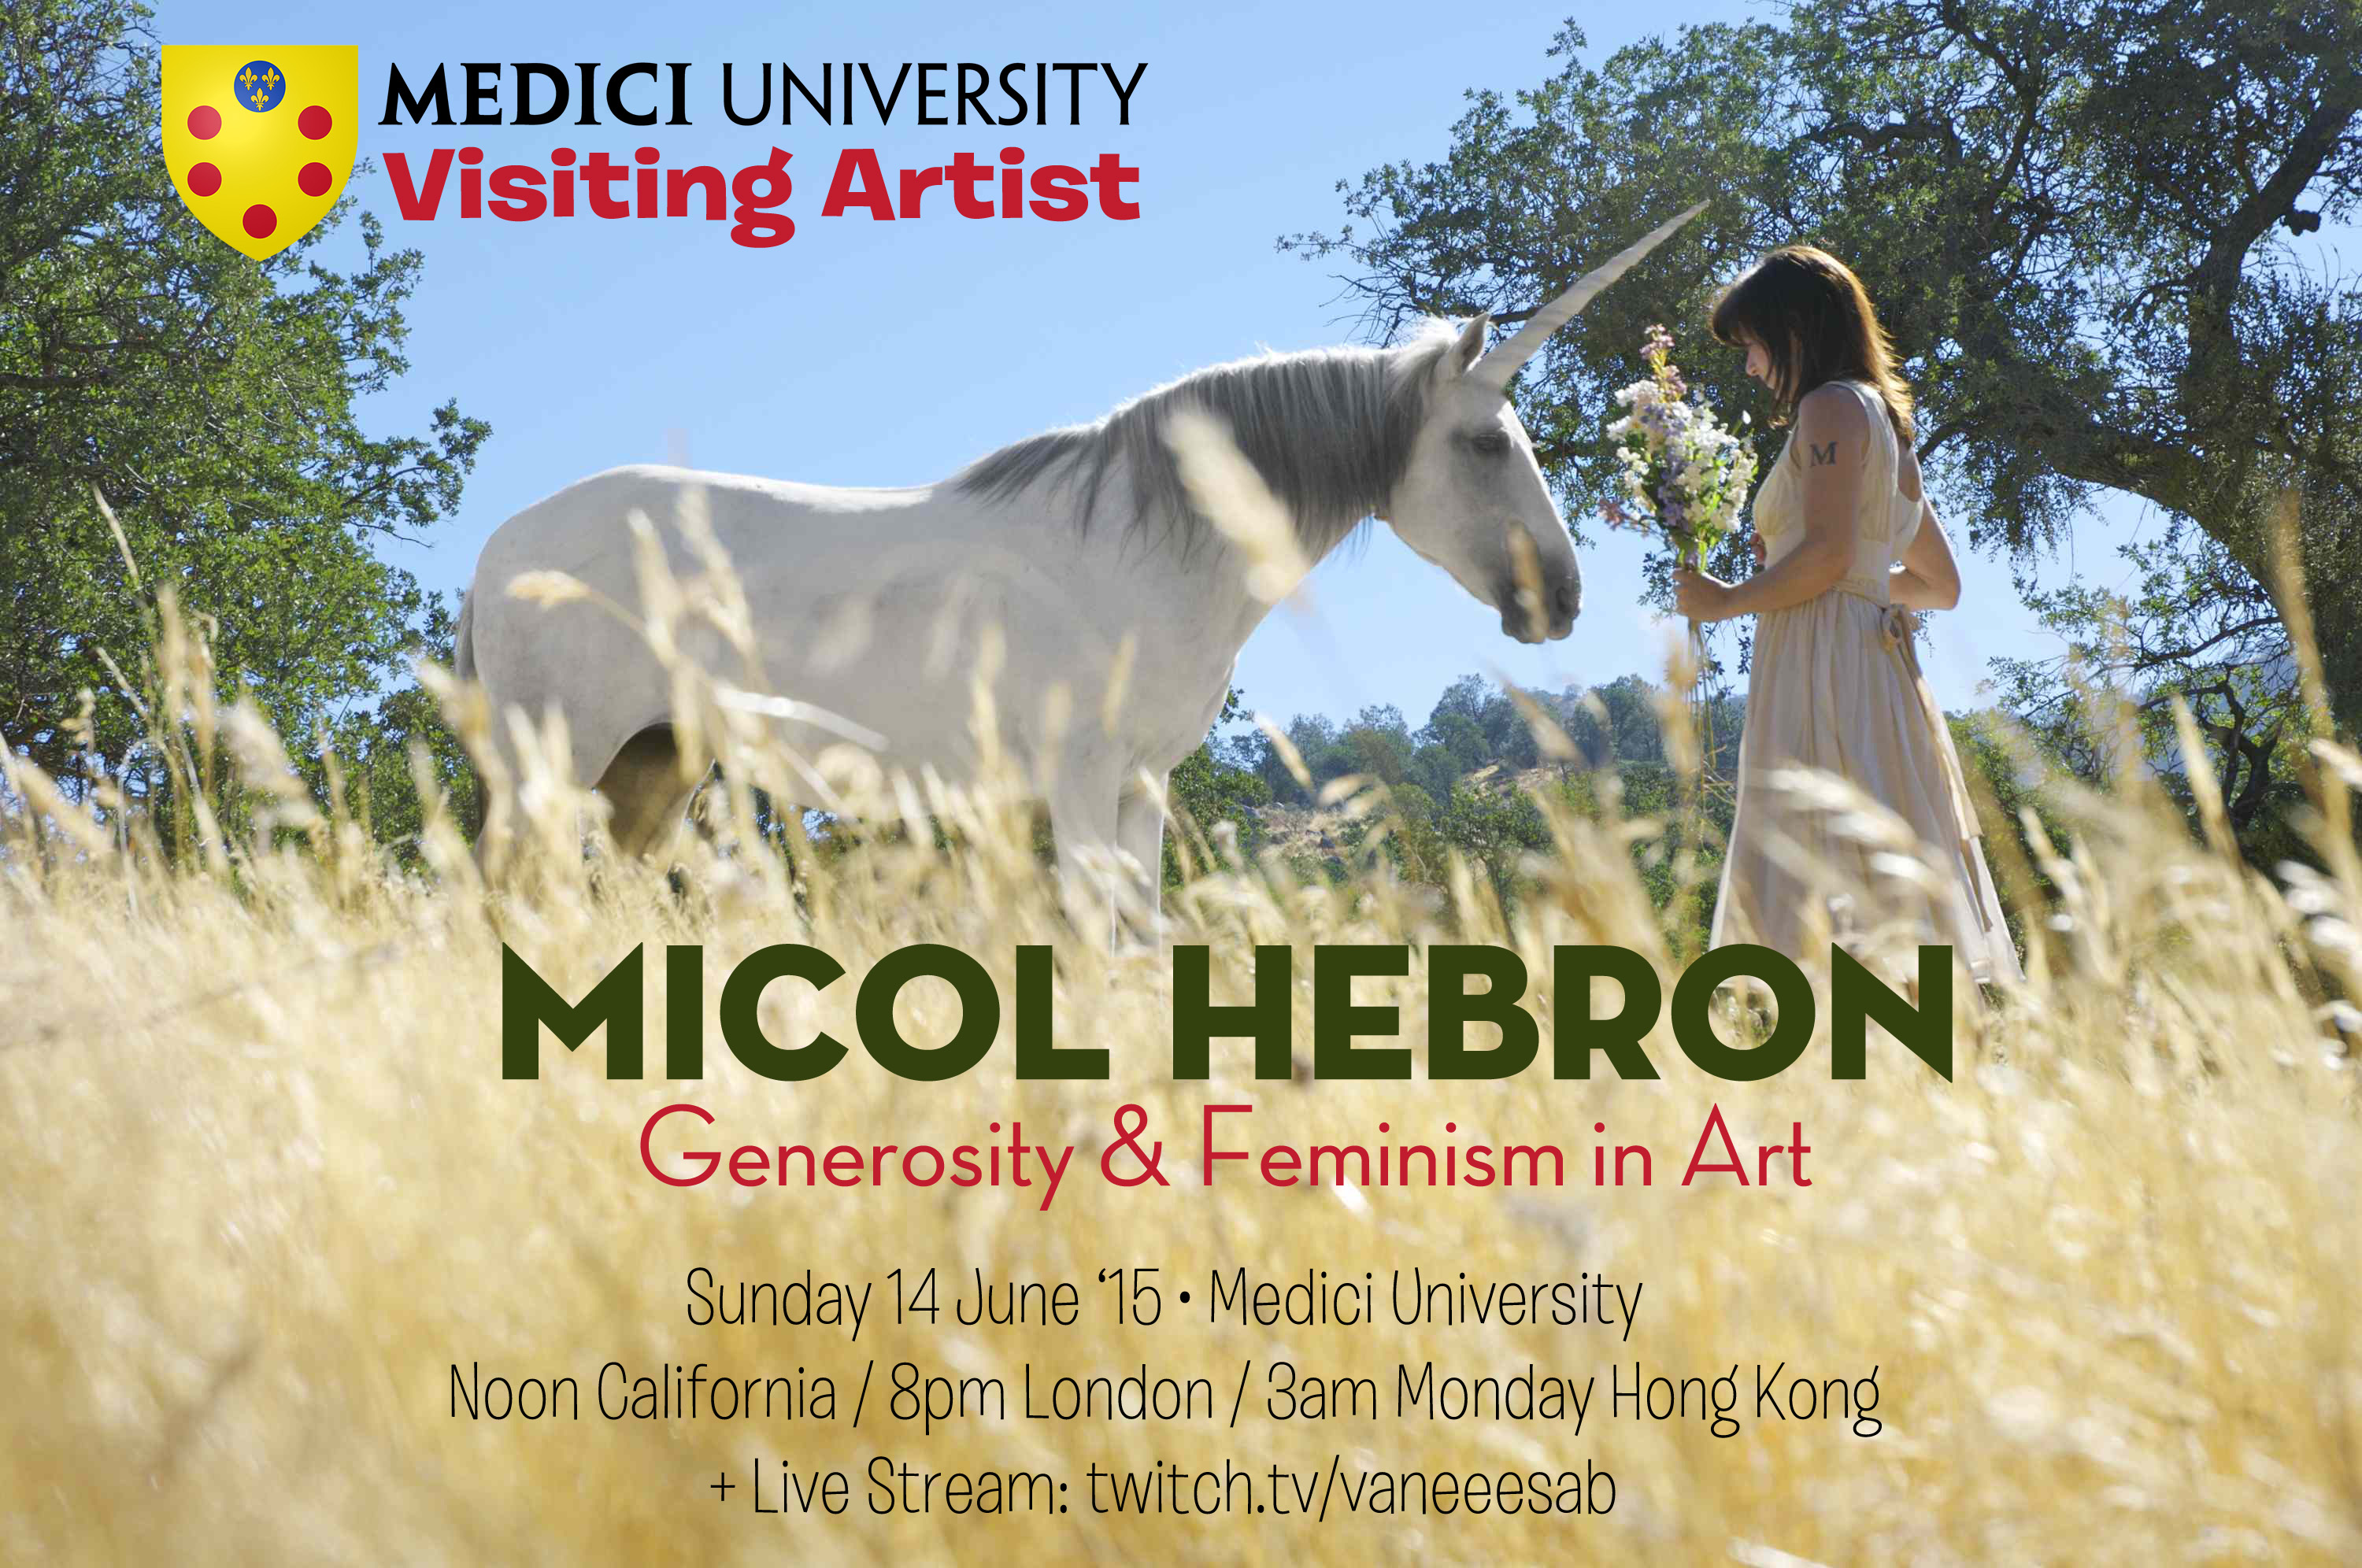 Poster for Micol Hebron's Visiting Artist Talk "Generosity and Feminism in Art" at Medici University on 14 June 2015